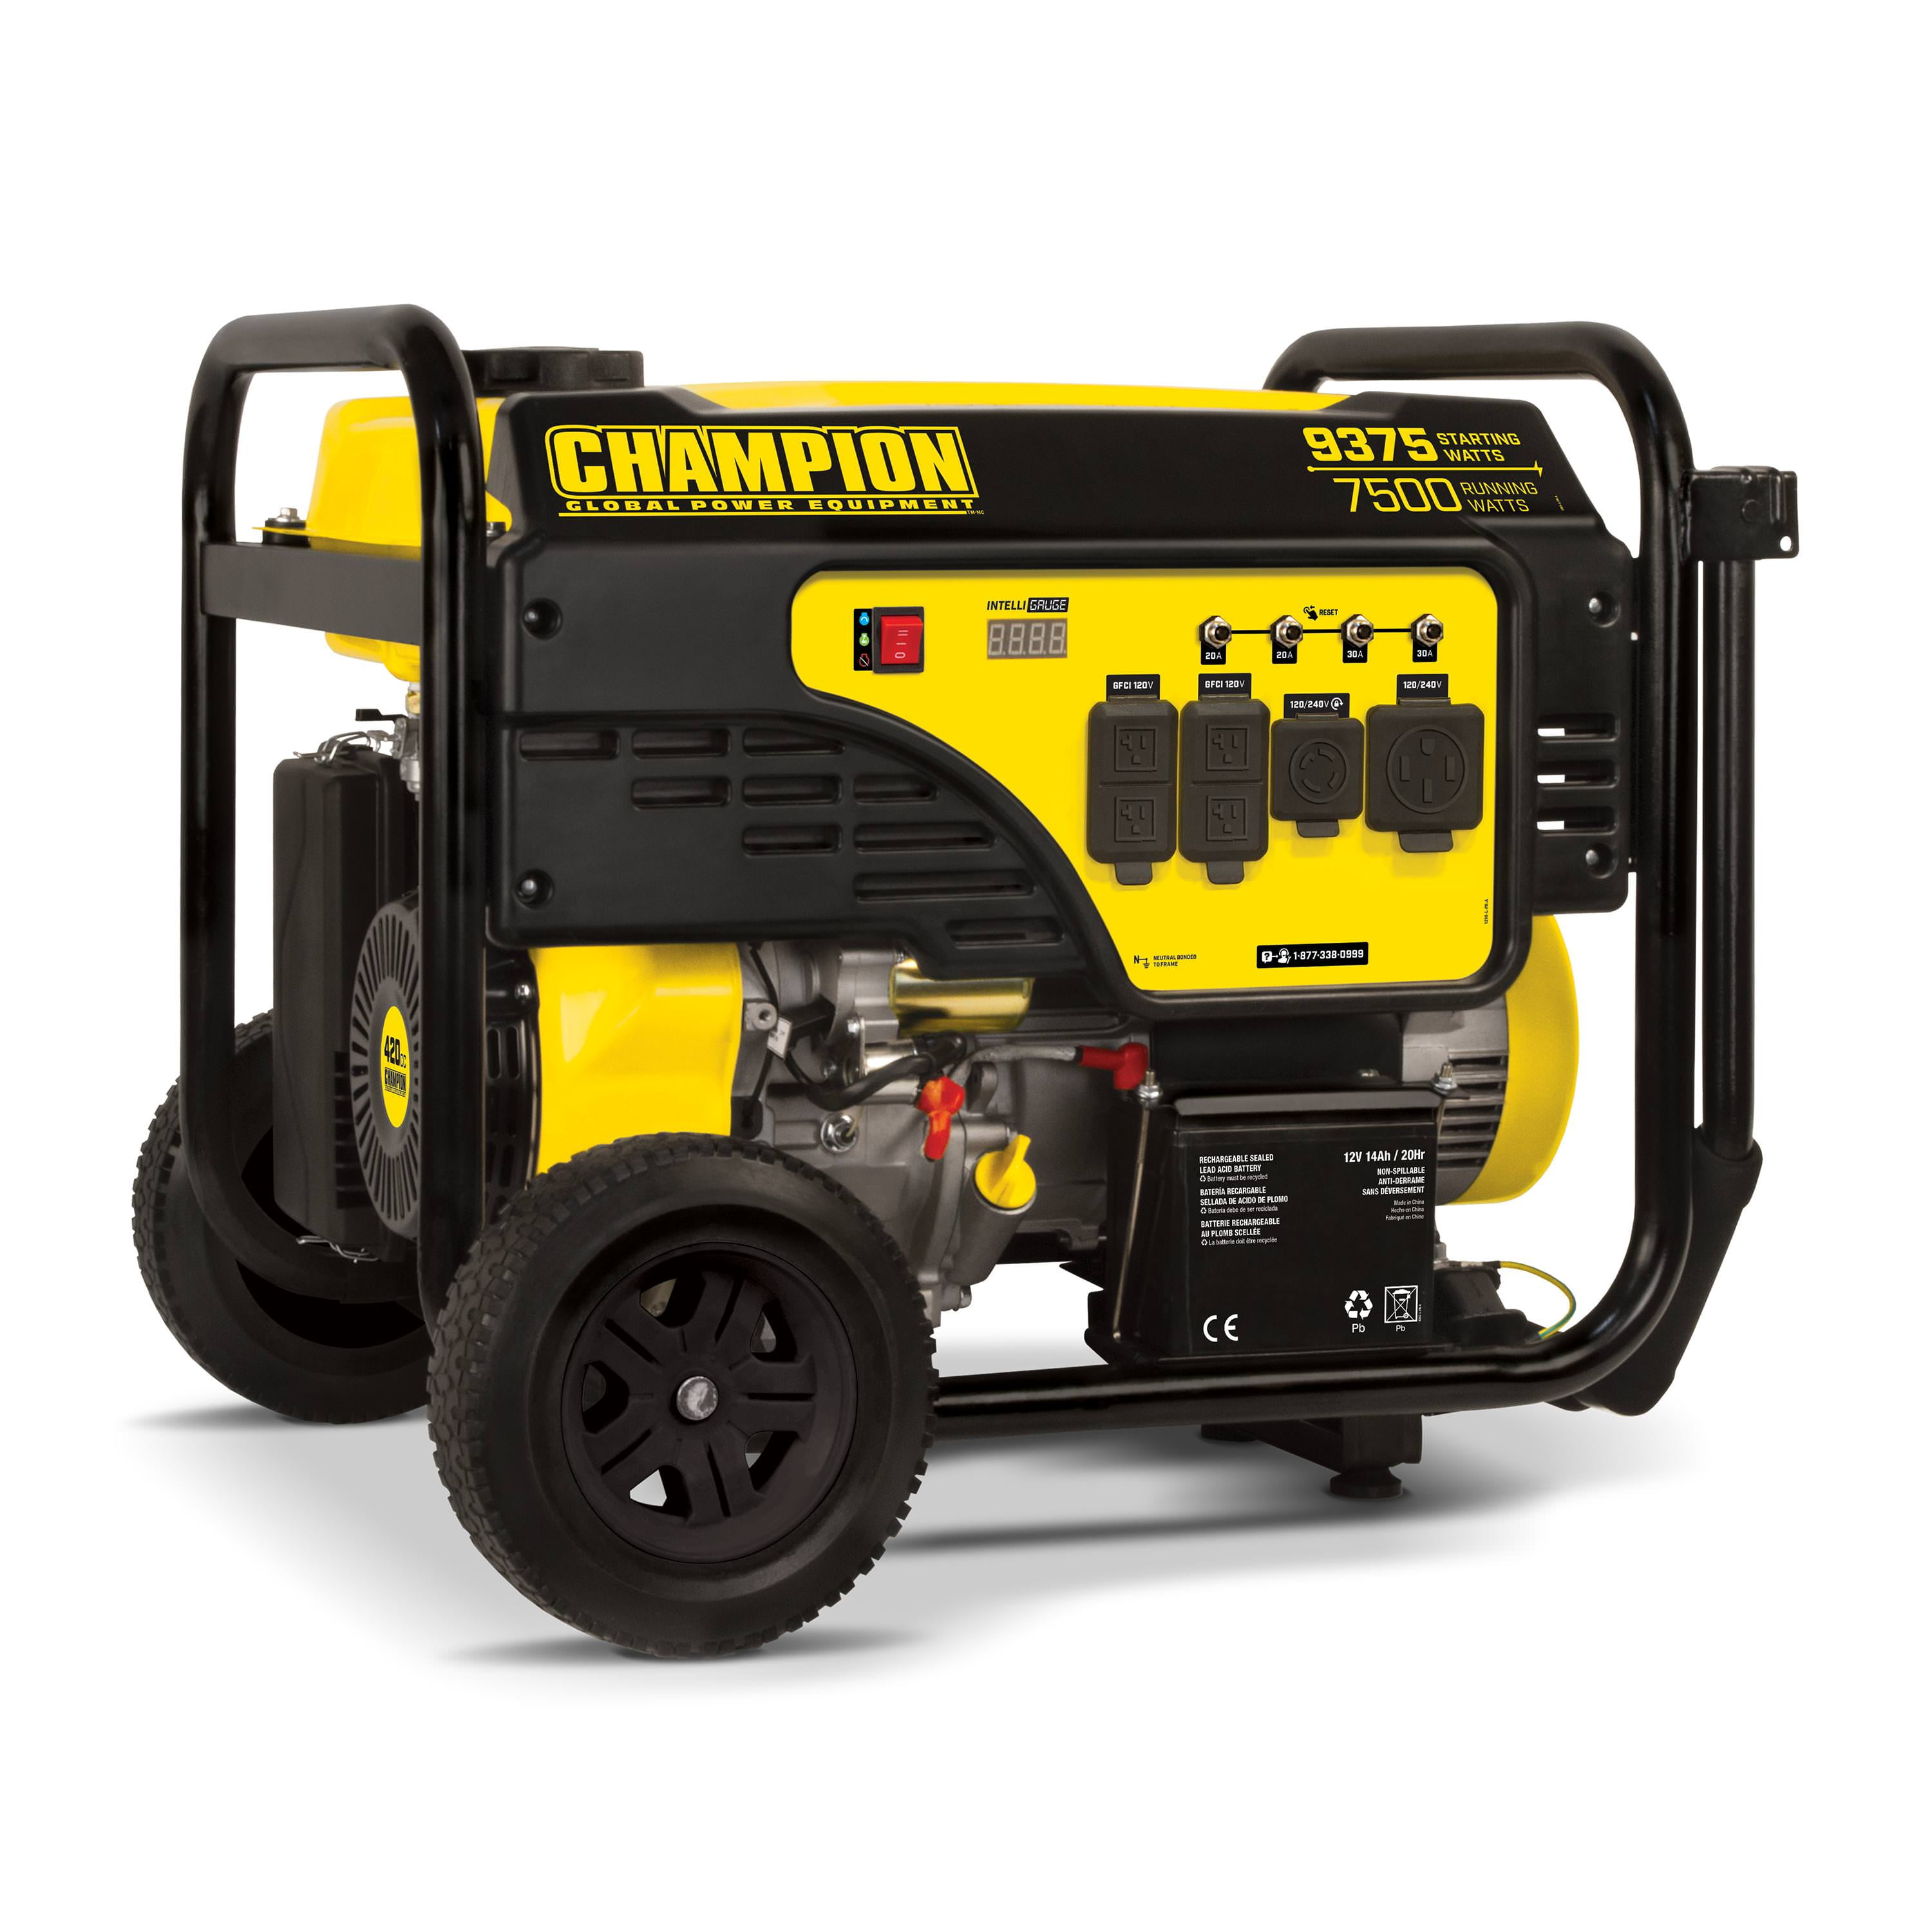 Champion Power Equipment 9375/7500-Watt Portable Generator with